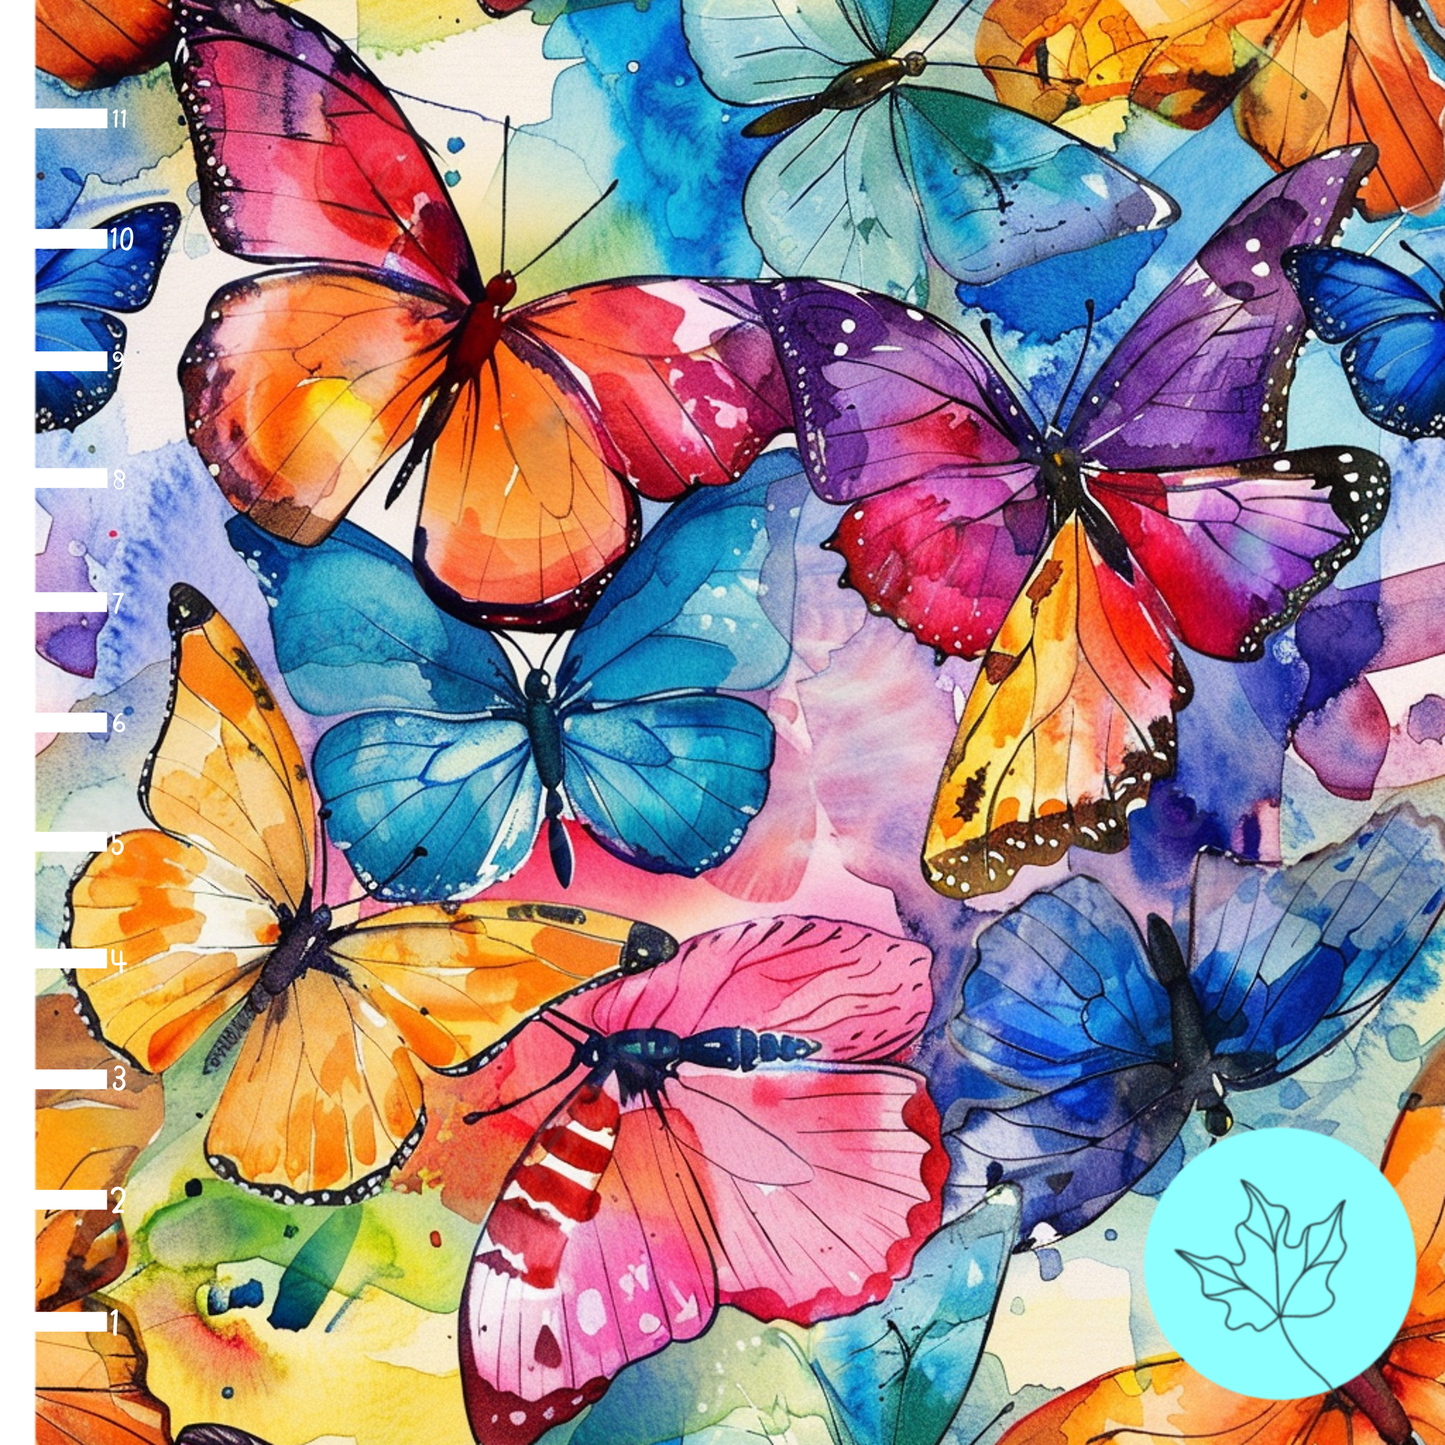 watercolour vibrant mariposa